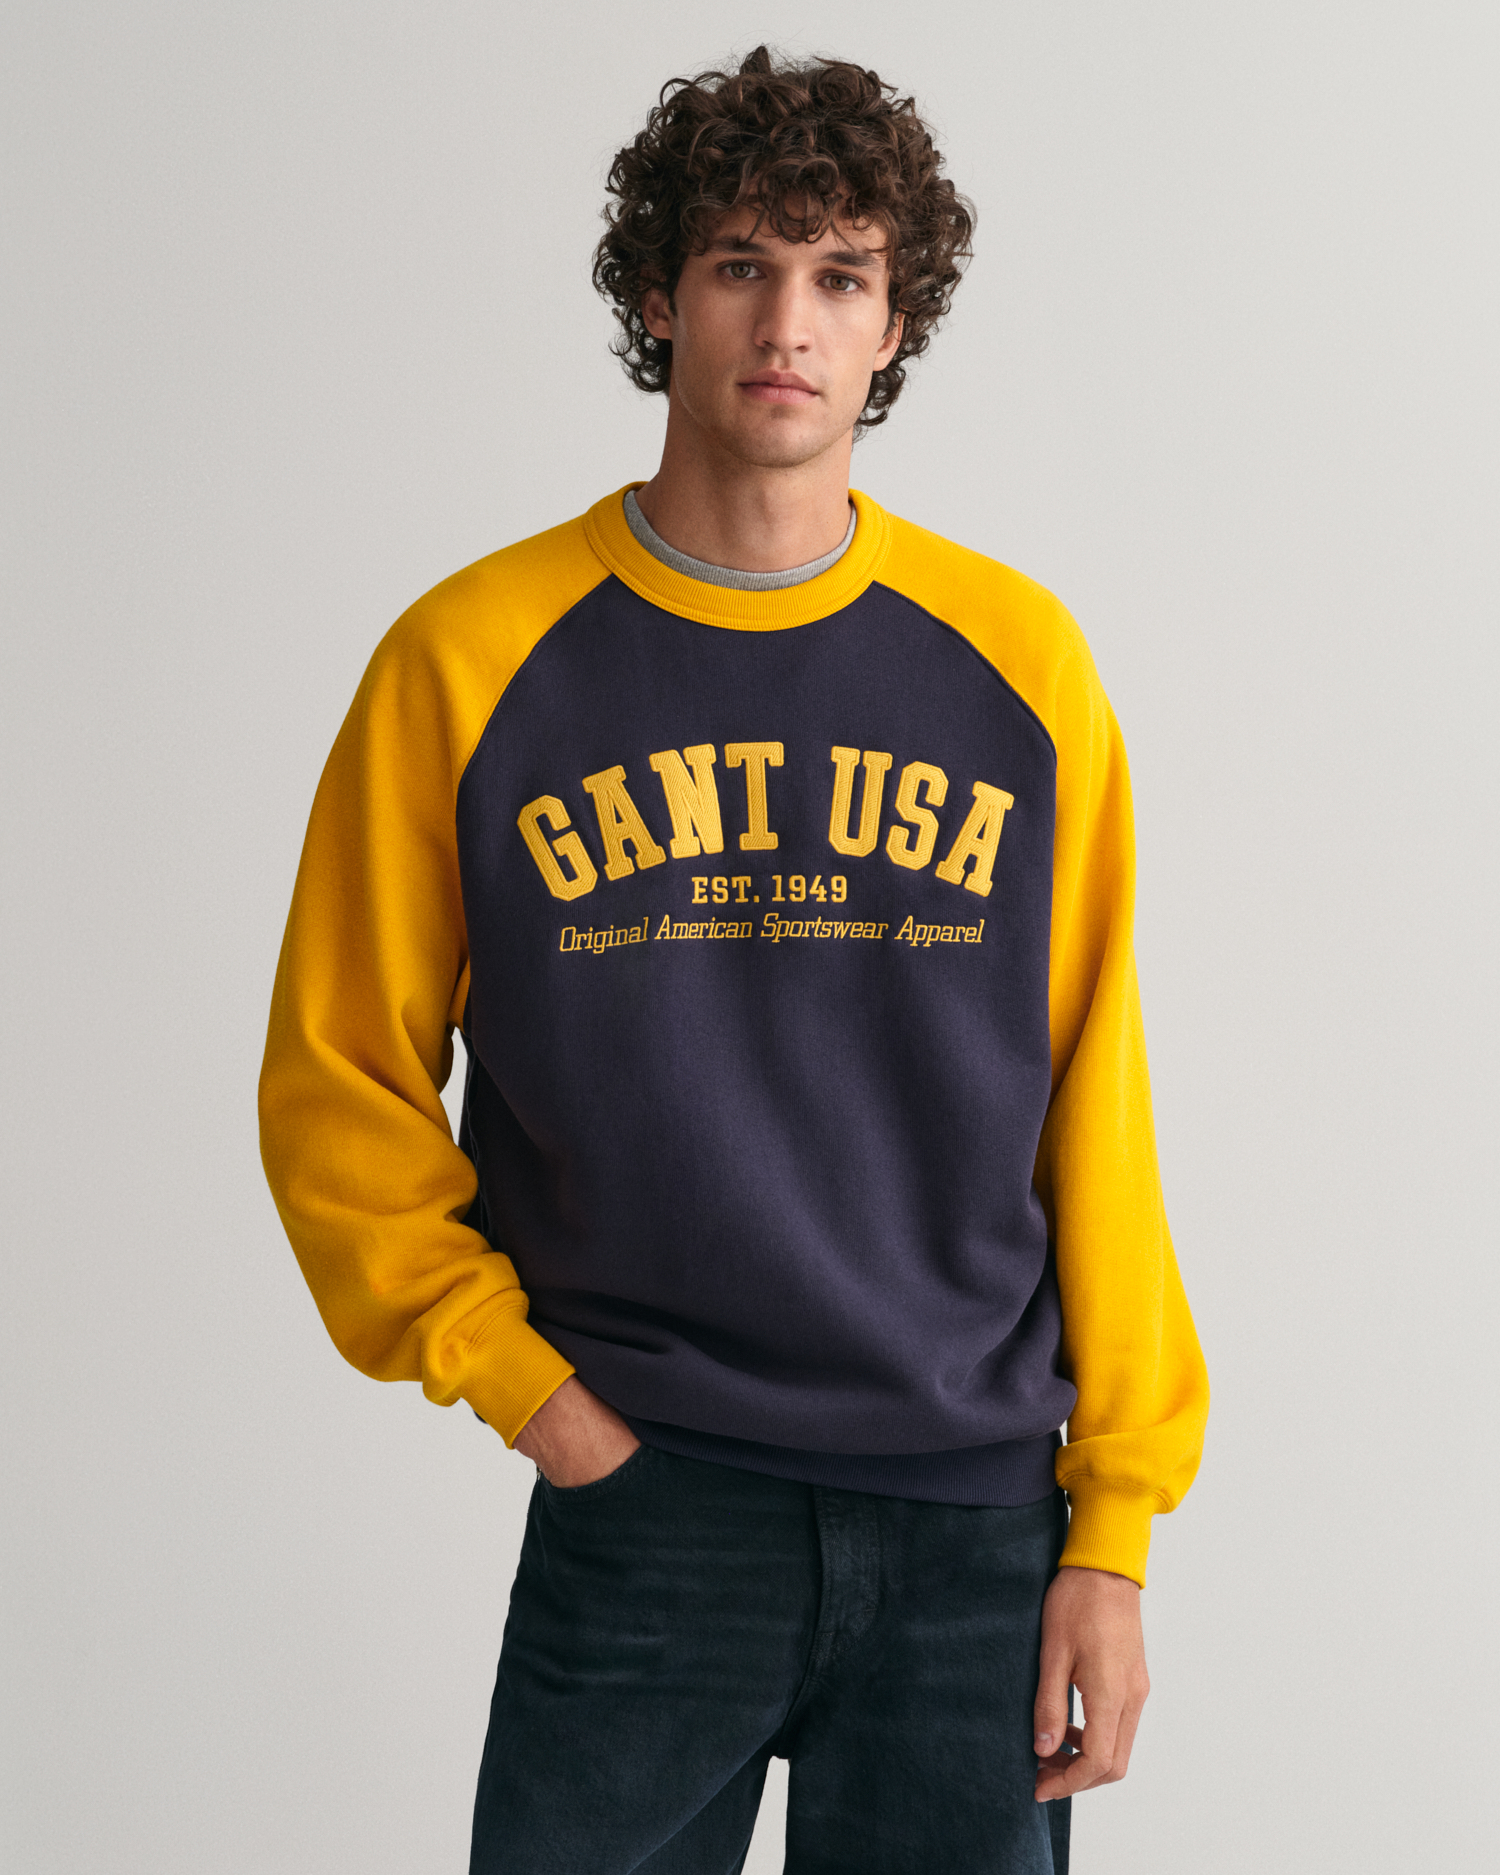 USA Crew GANT Neck Sweatshirt - GANT